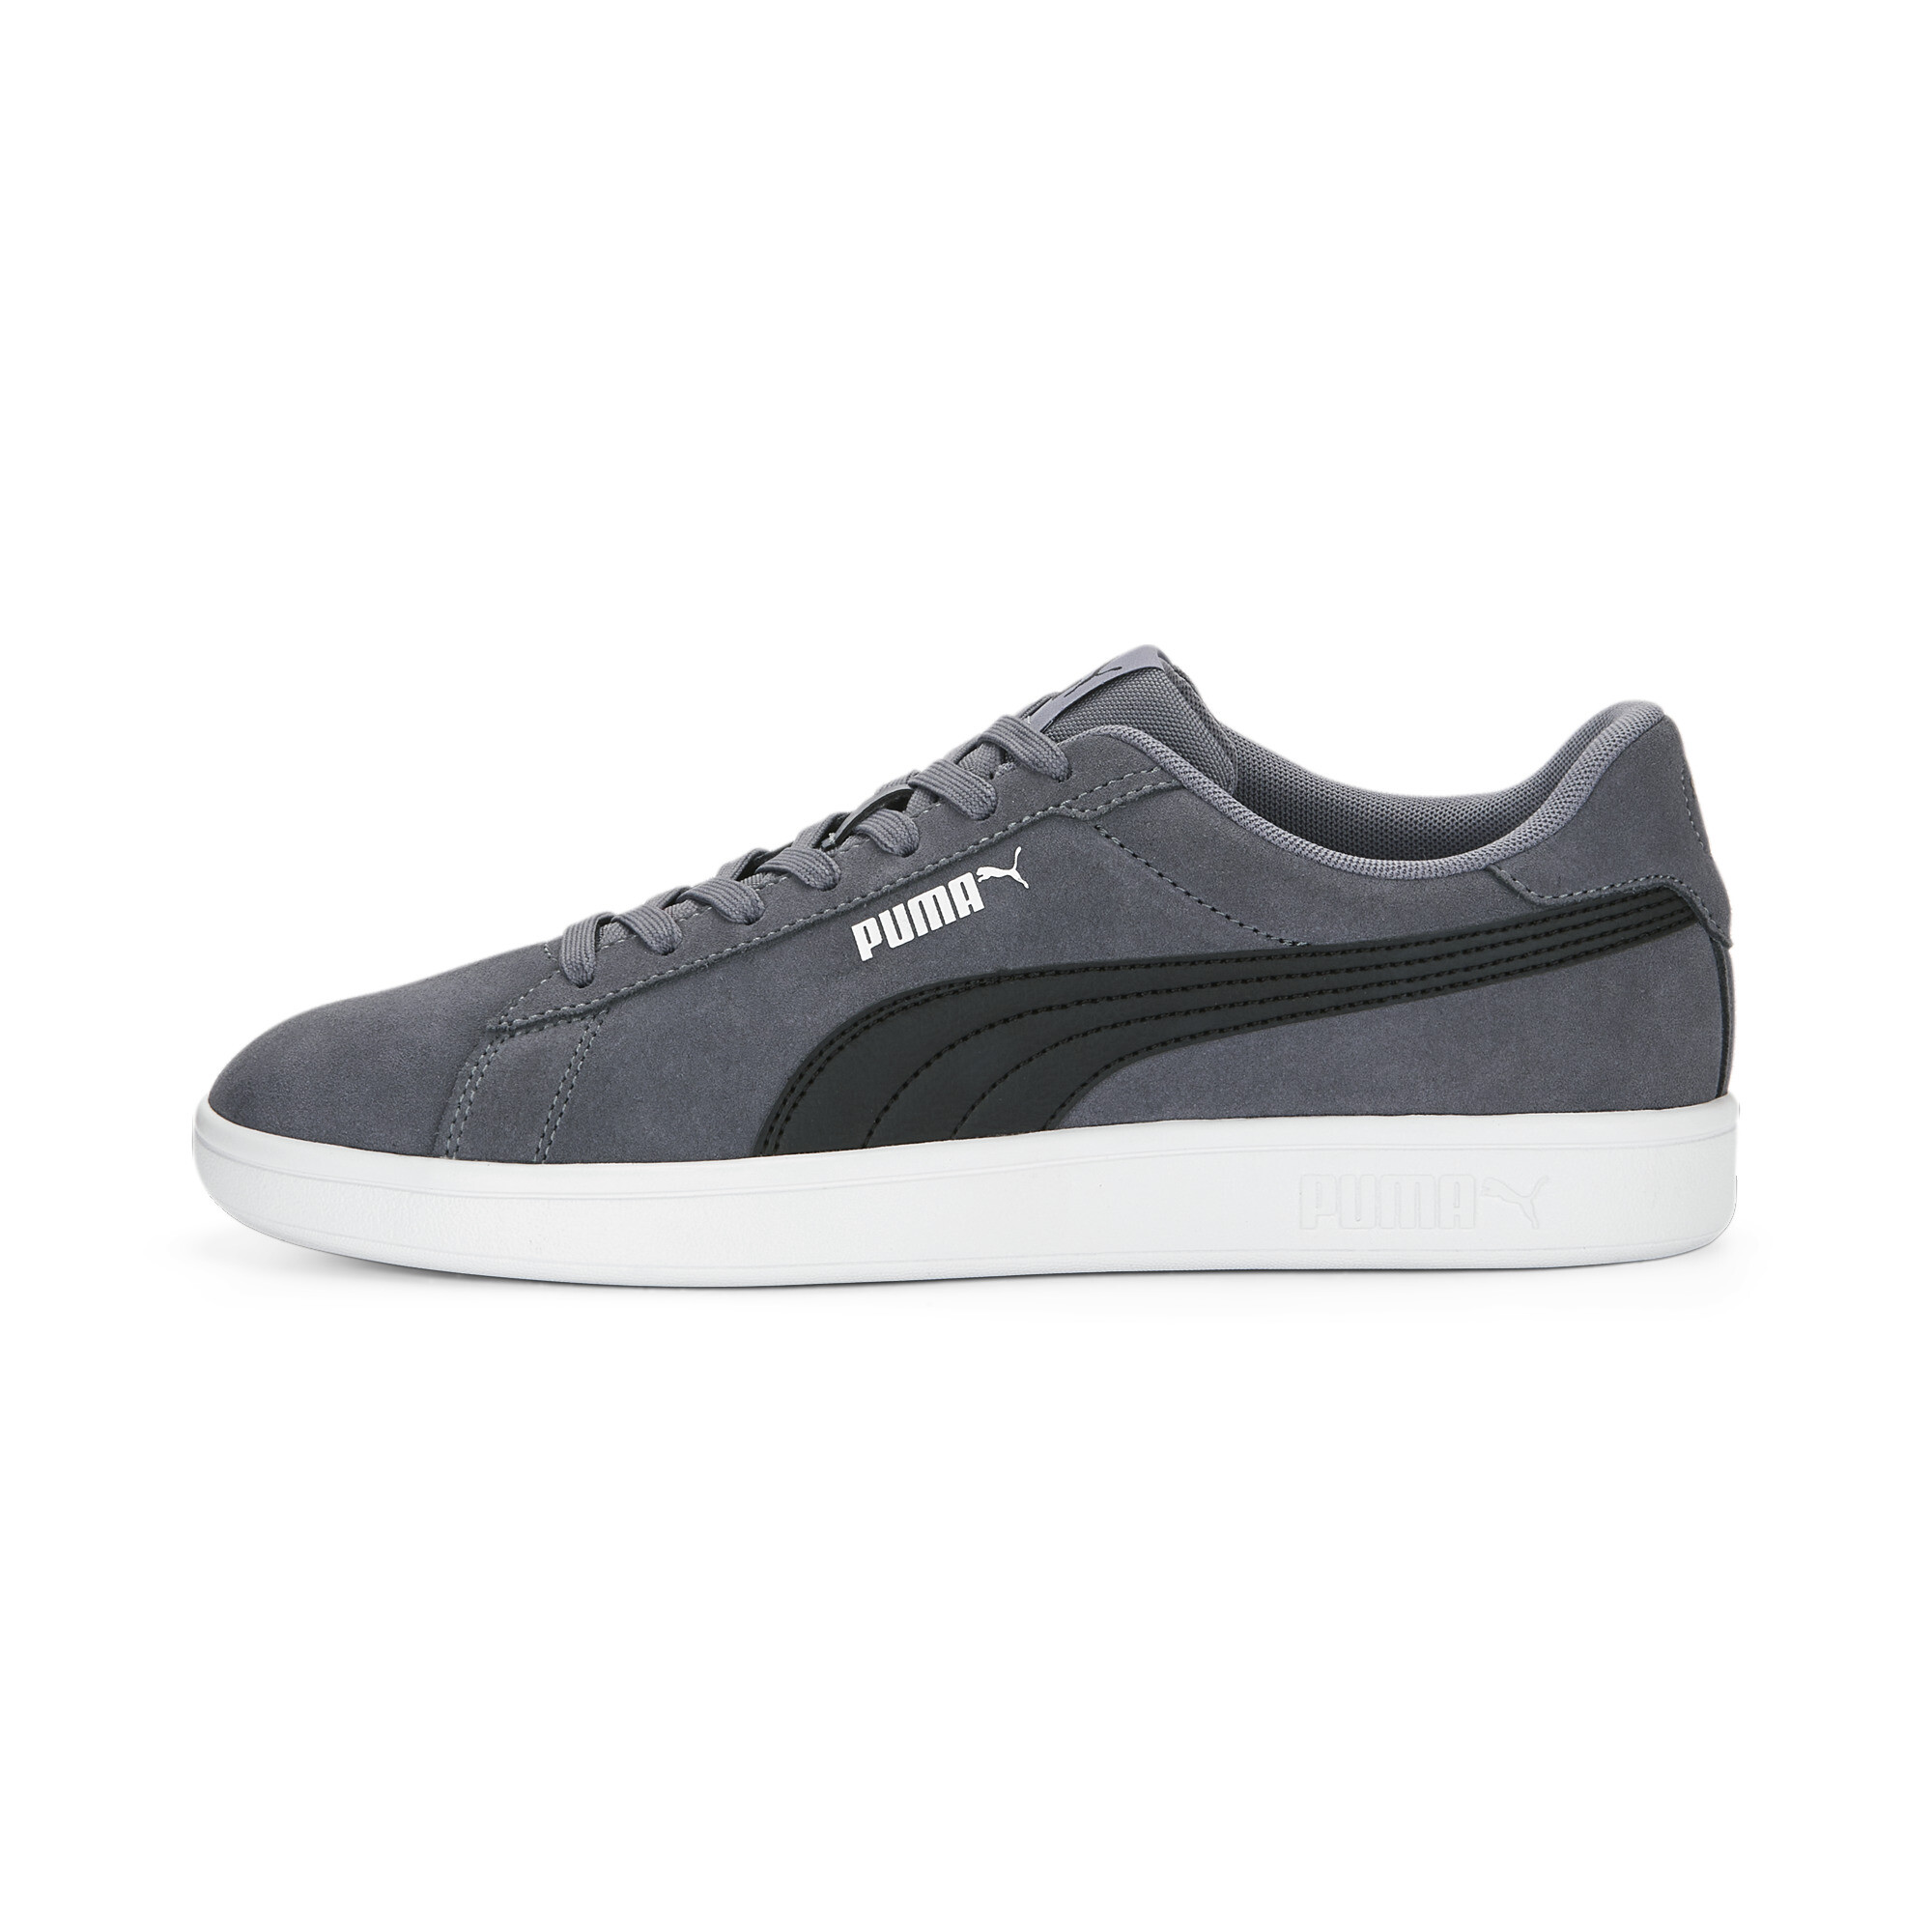 Puma Smash 3.0 Sneakers, Gray, Size 39, Shoes